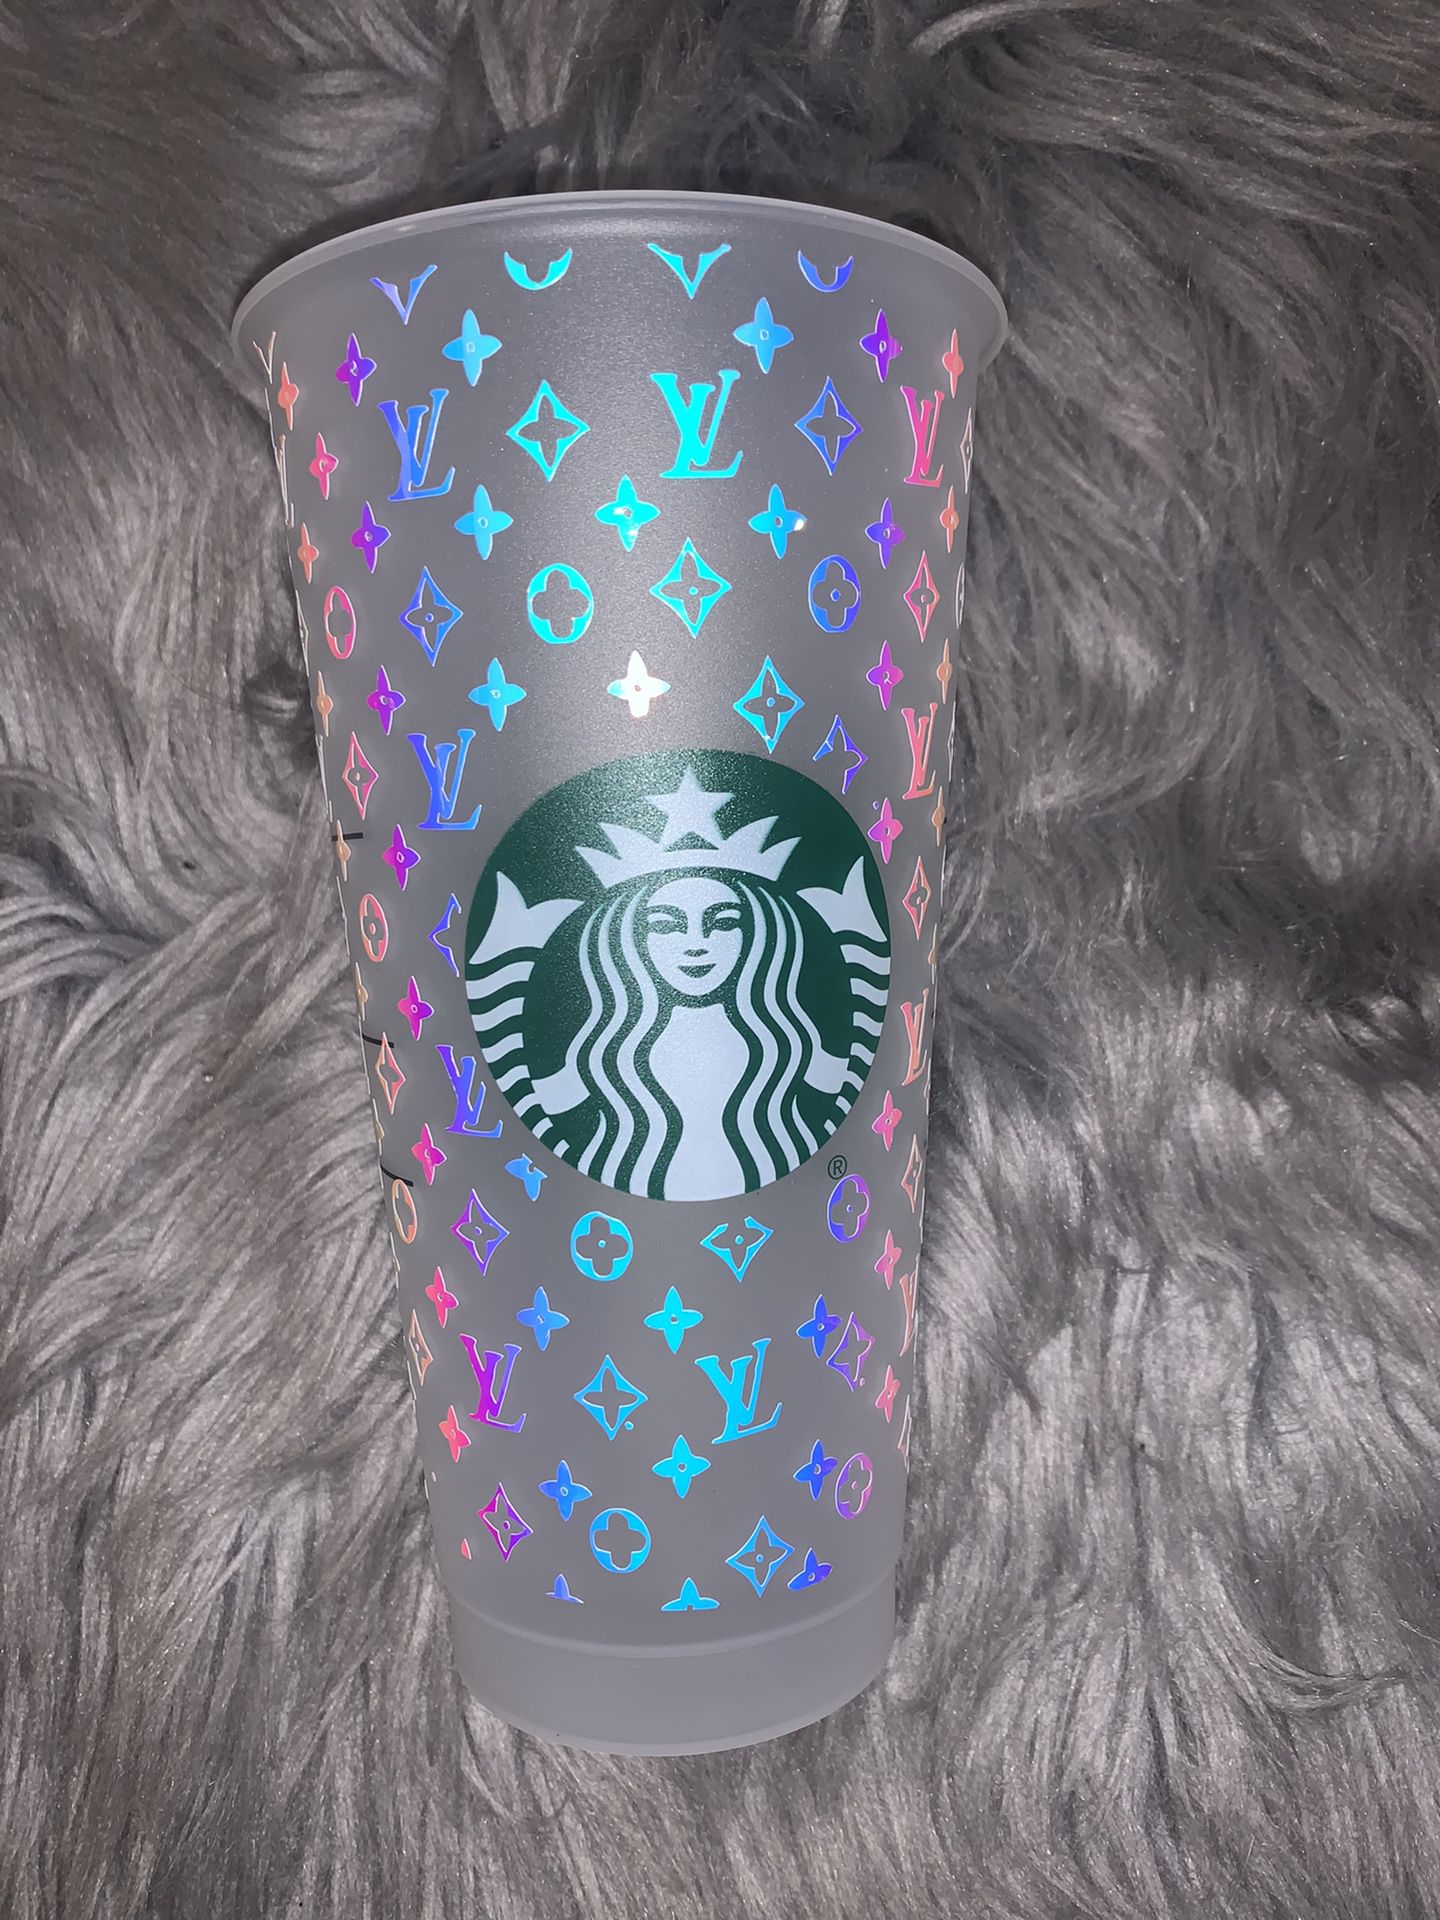 Customized Starbucks cups